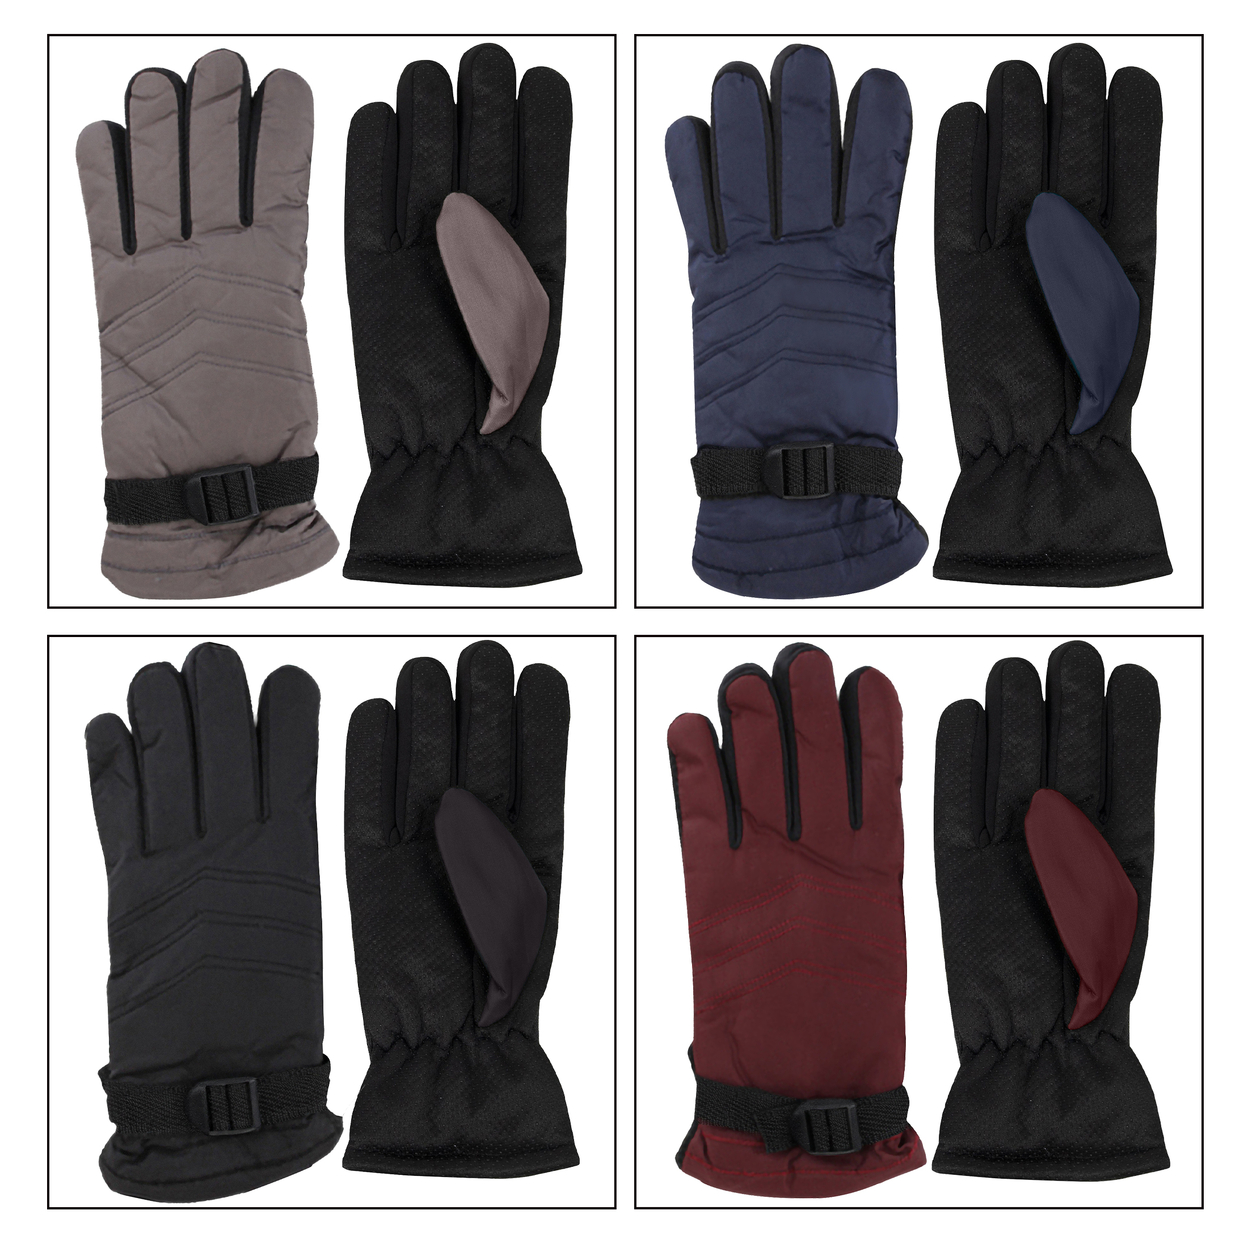 3-Pairs Women's Cozy Fur Lined Snow Ski Warm Winter Gloves - Black/red/grey